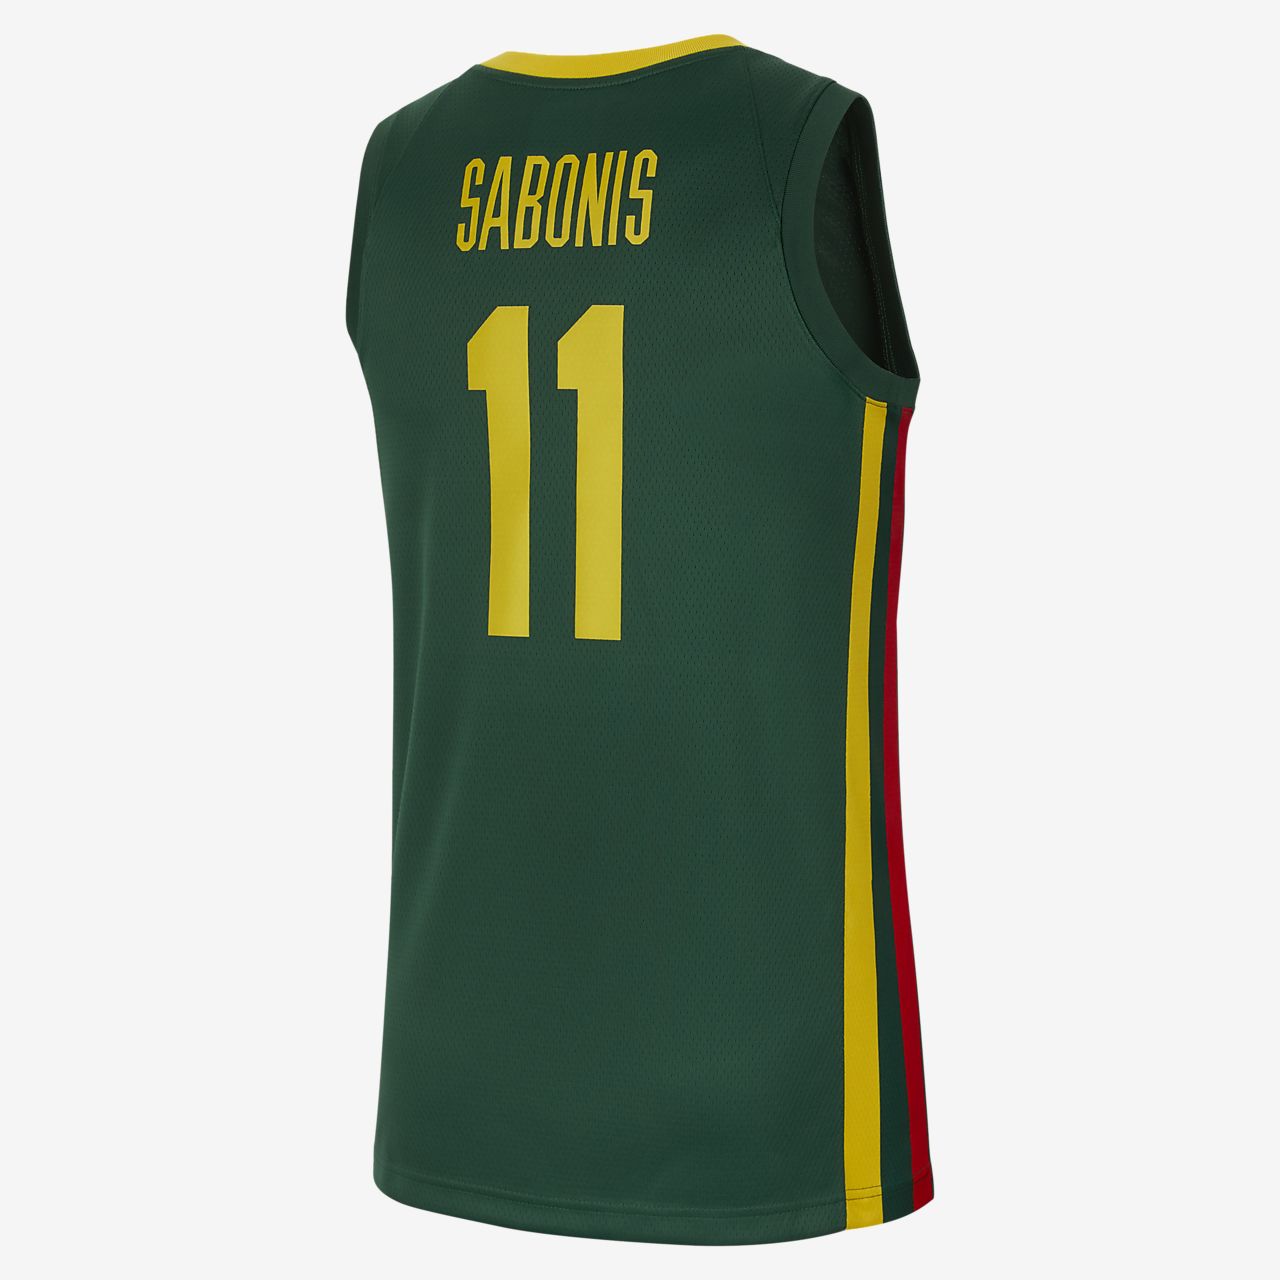 lithuania basketball jersey